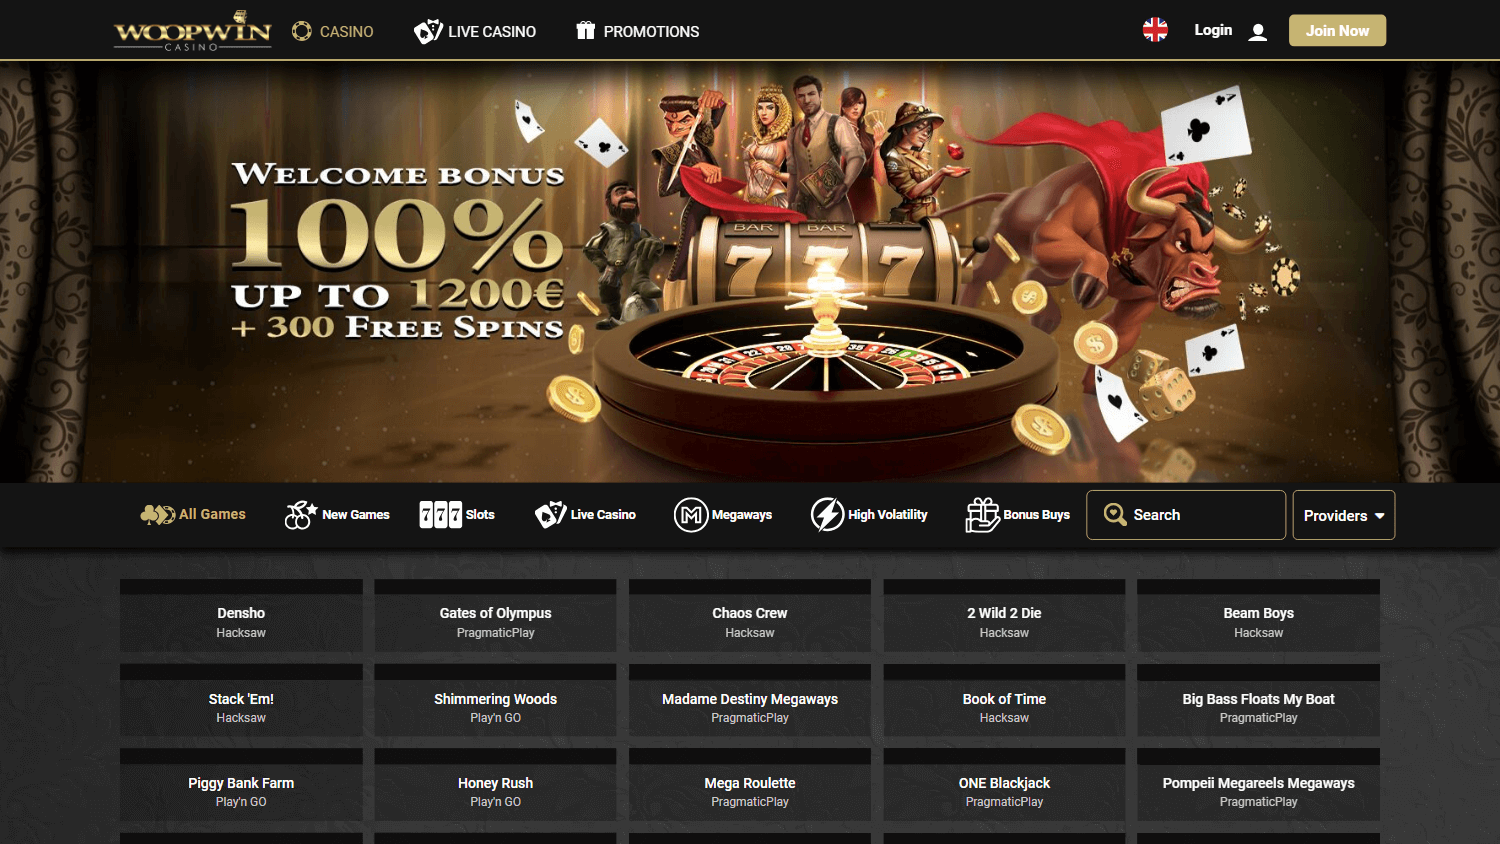 woopwin_casino_homepage_desktop